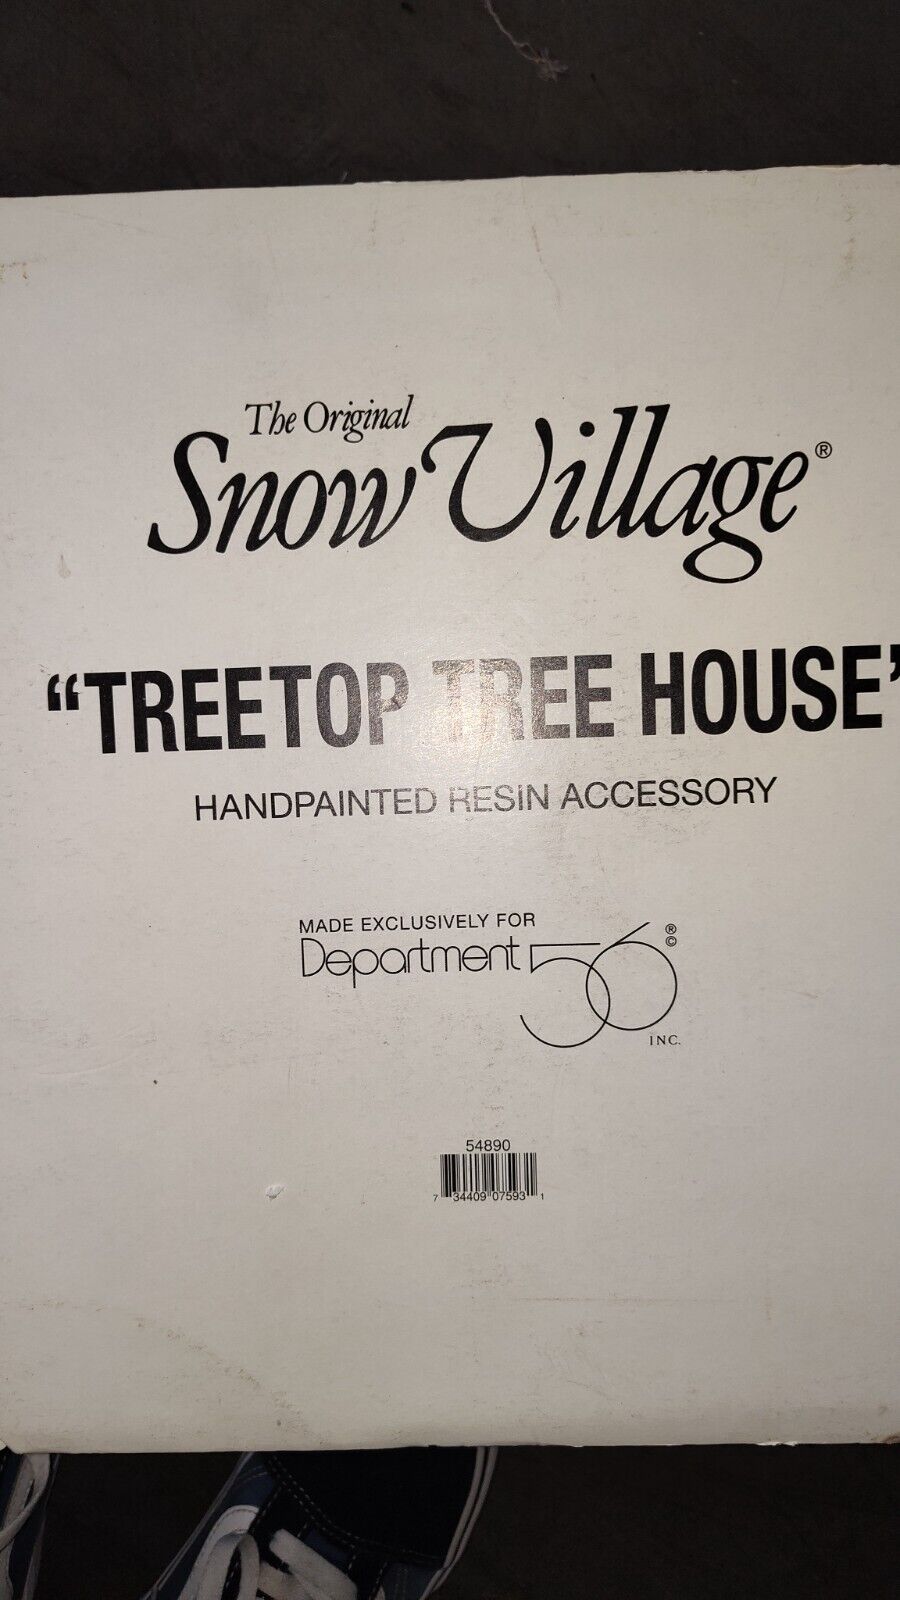 Dept 56 Snow Village Treetop Tree House 54890 Retired with Original Box